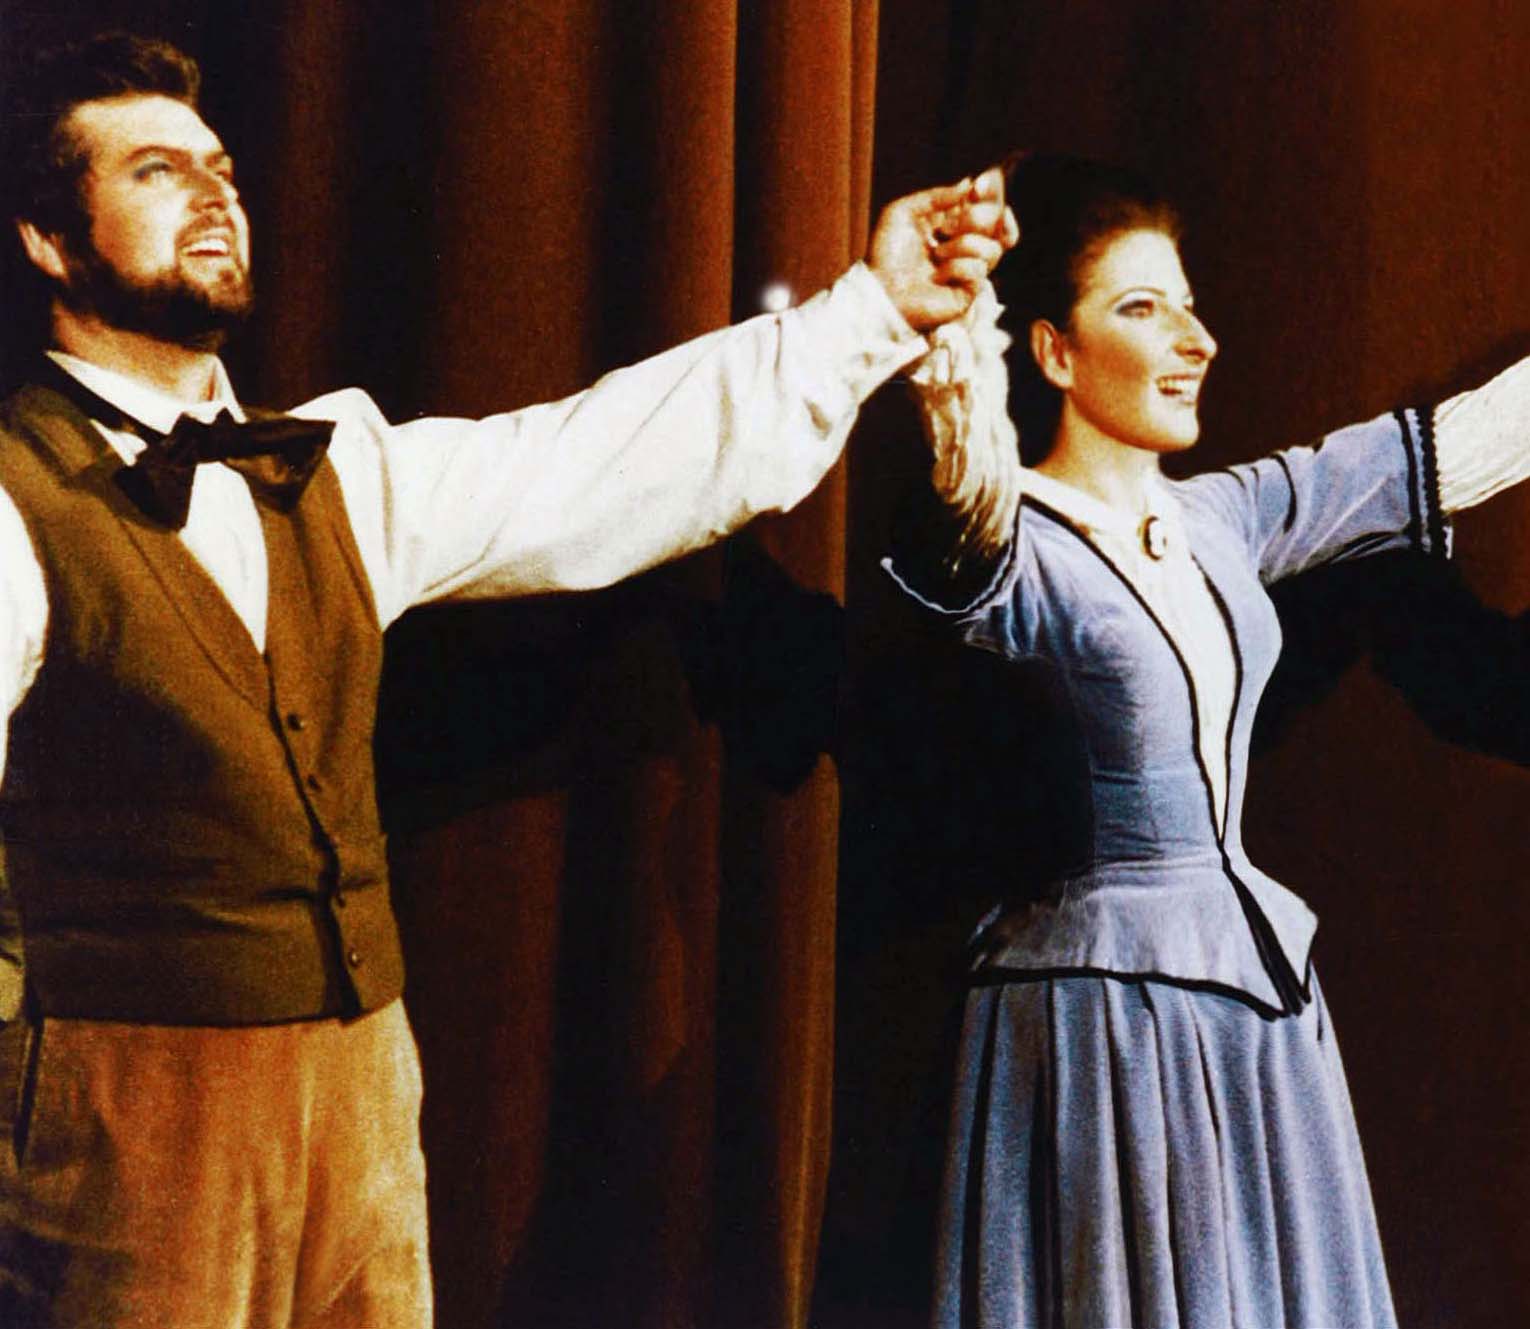 Lucia Aliberti with the Slovak tenor Peter Dvorsky⚘Deutsche Oper Berlin⚘Berlin⚘Opera⚘"La Traviata"⚘On Stage⚘:http://www.luciaaliberti.it #luciaaliberti #peterdvorsky #pierocappuccilli #deutscheoperberlin #berlin #latraviata #opera #onstage